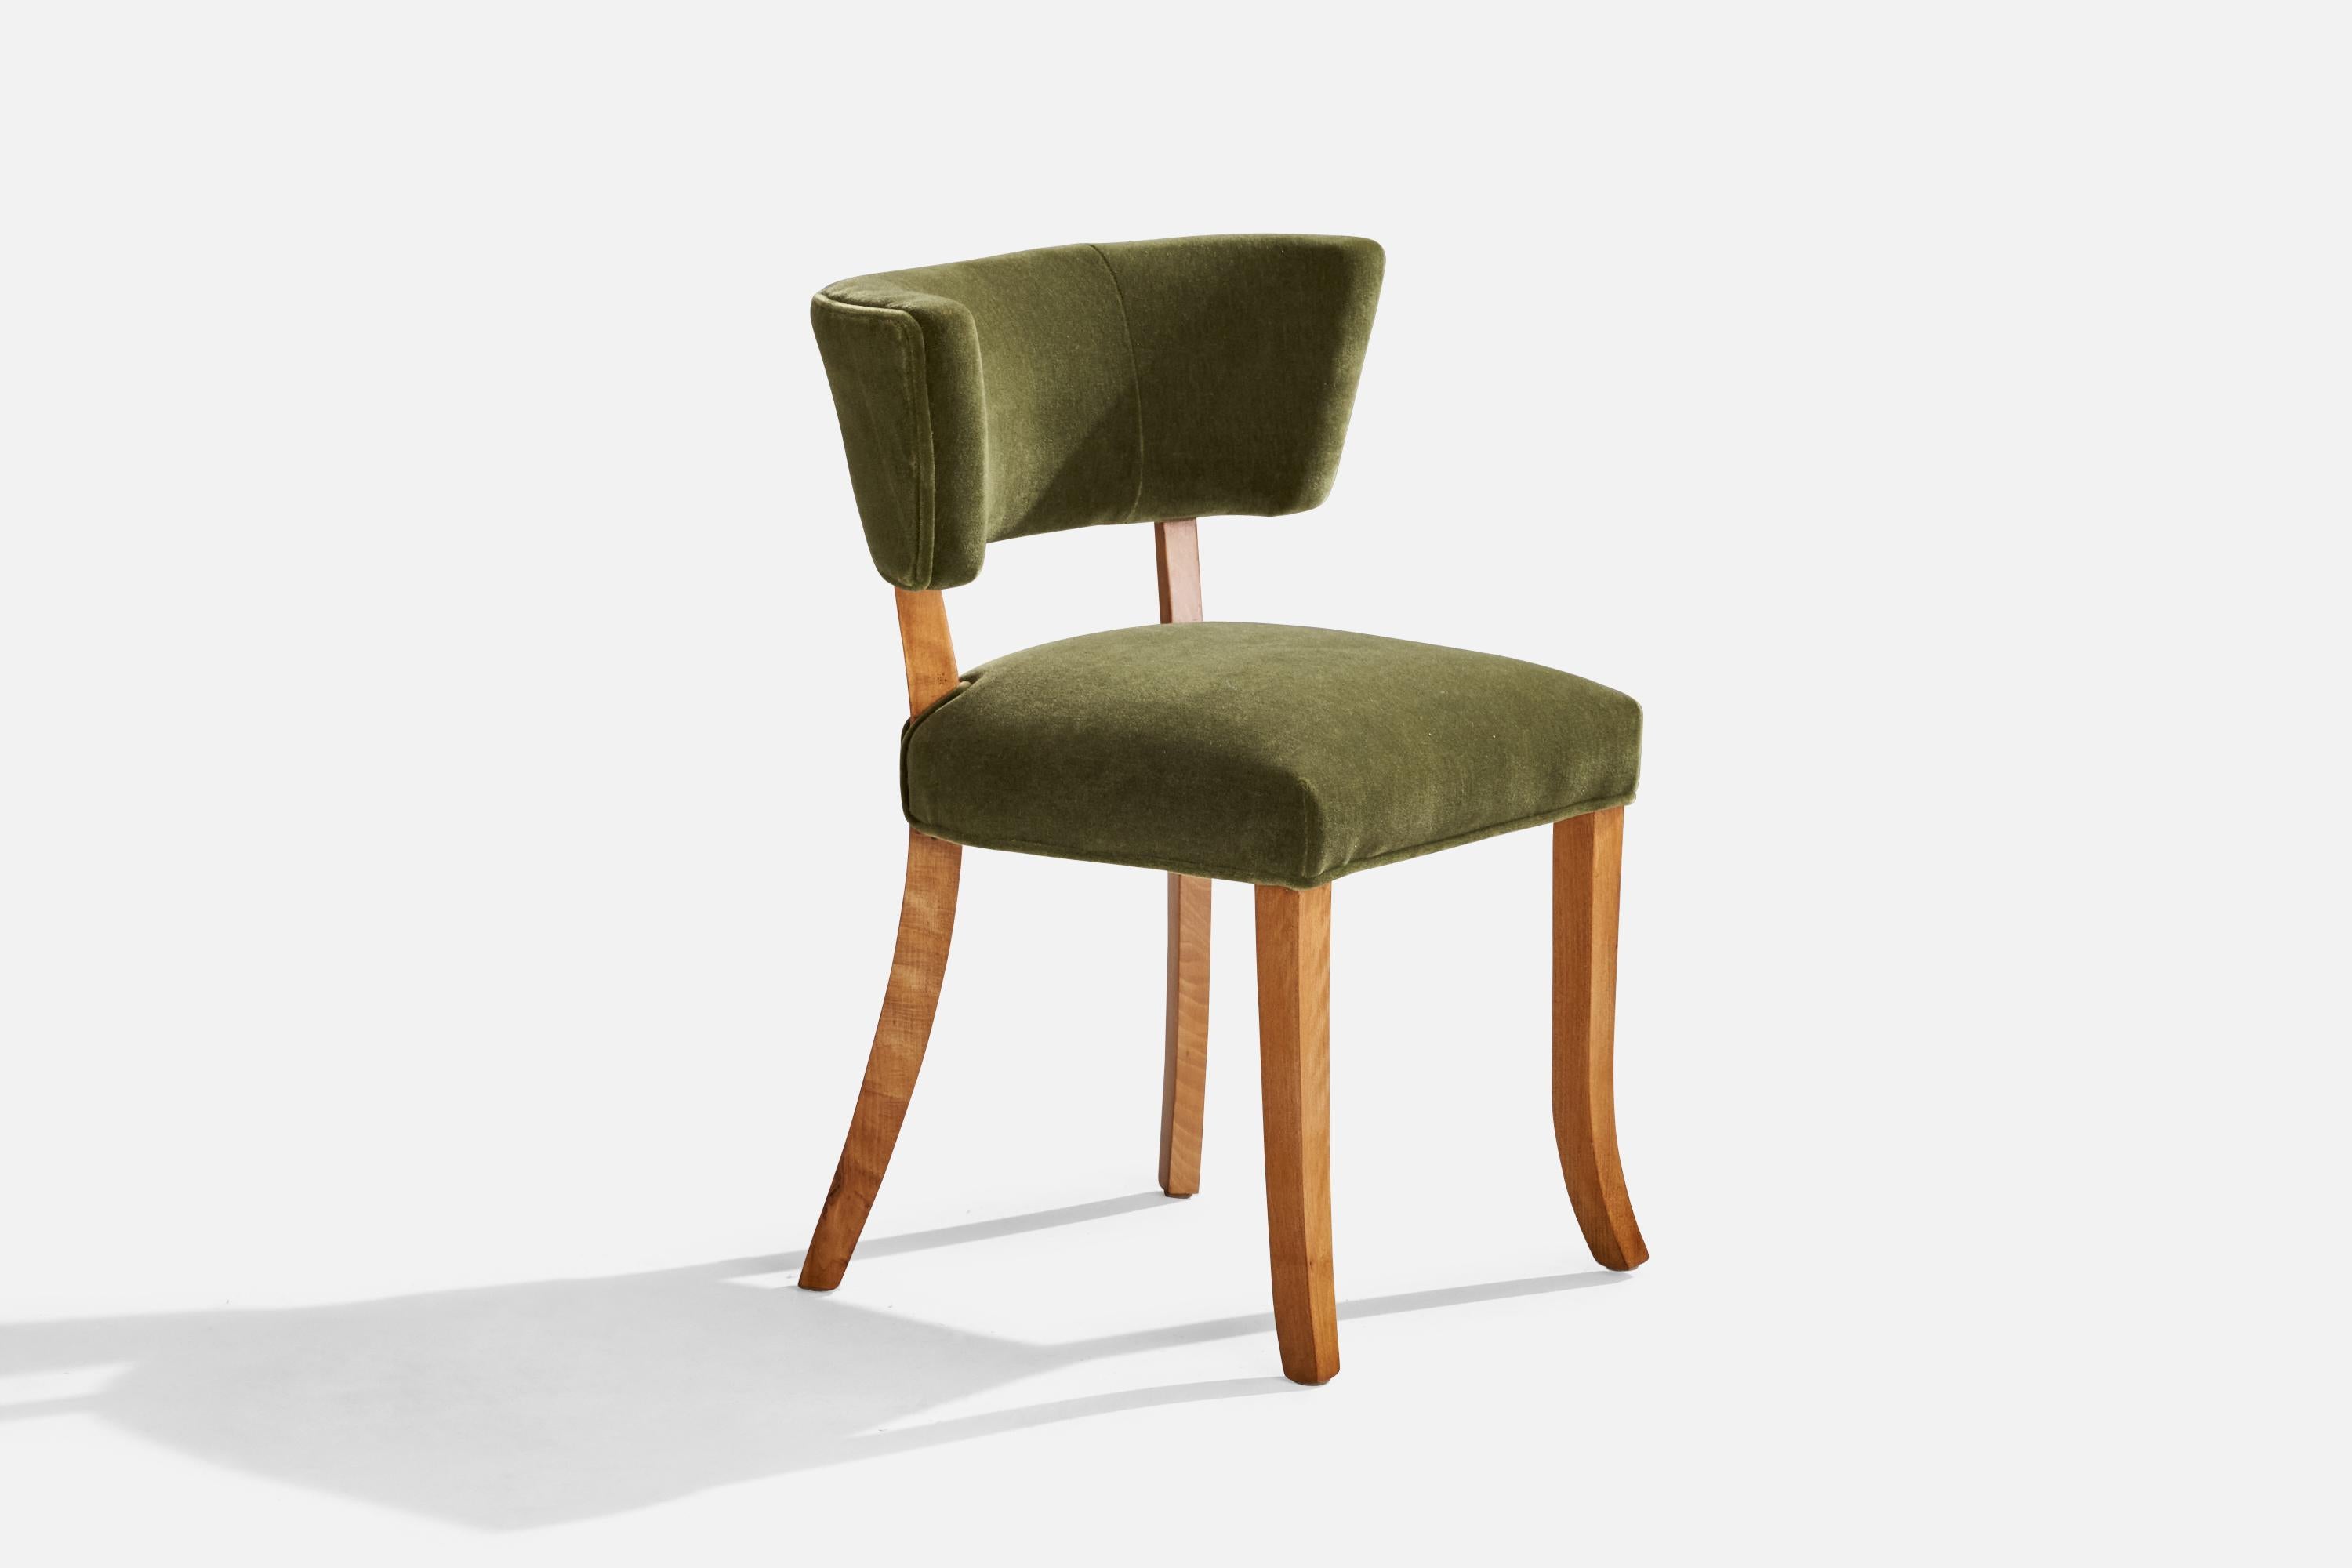 A green velvet and beech side chair designed and produced in Denmark, c. 1930s.

Reupholstered in brand new velvet.

Seat height: 18”